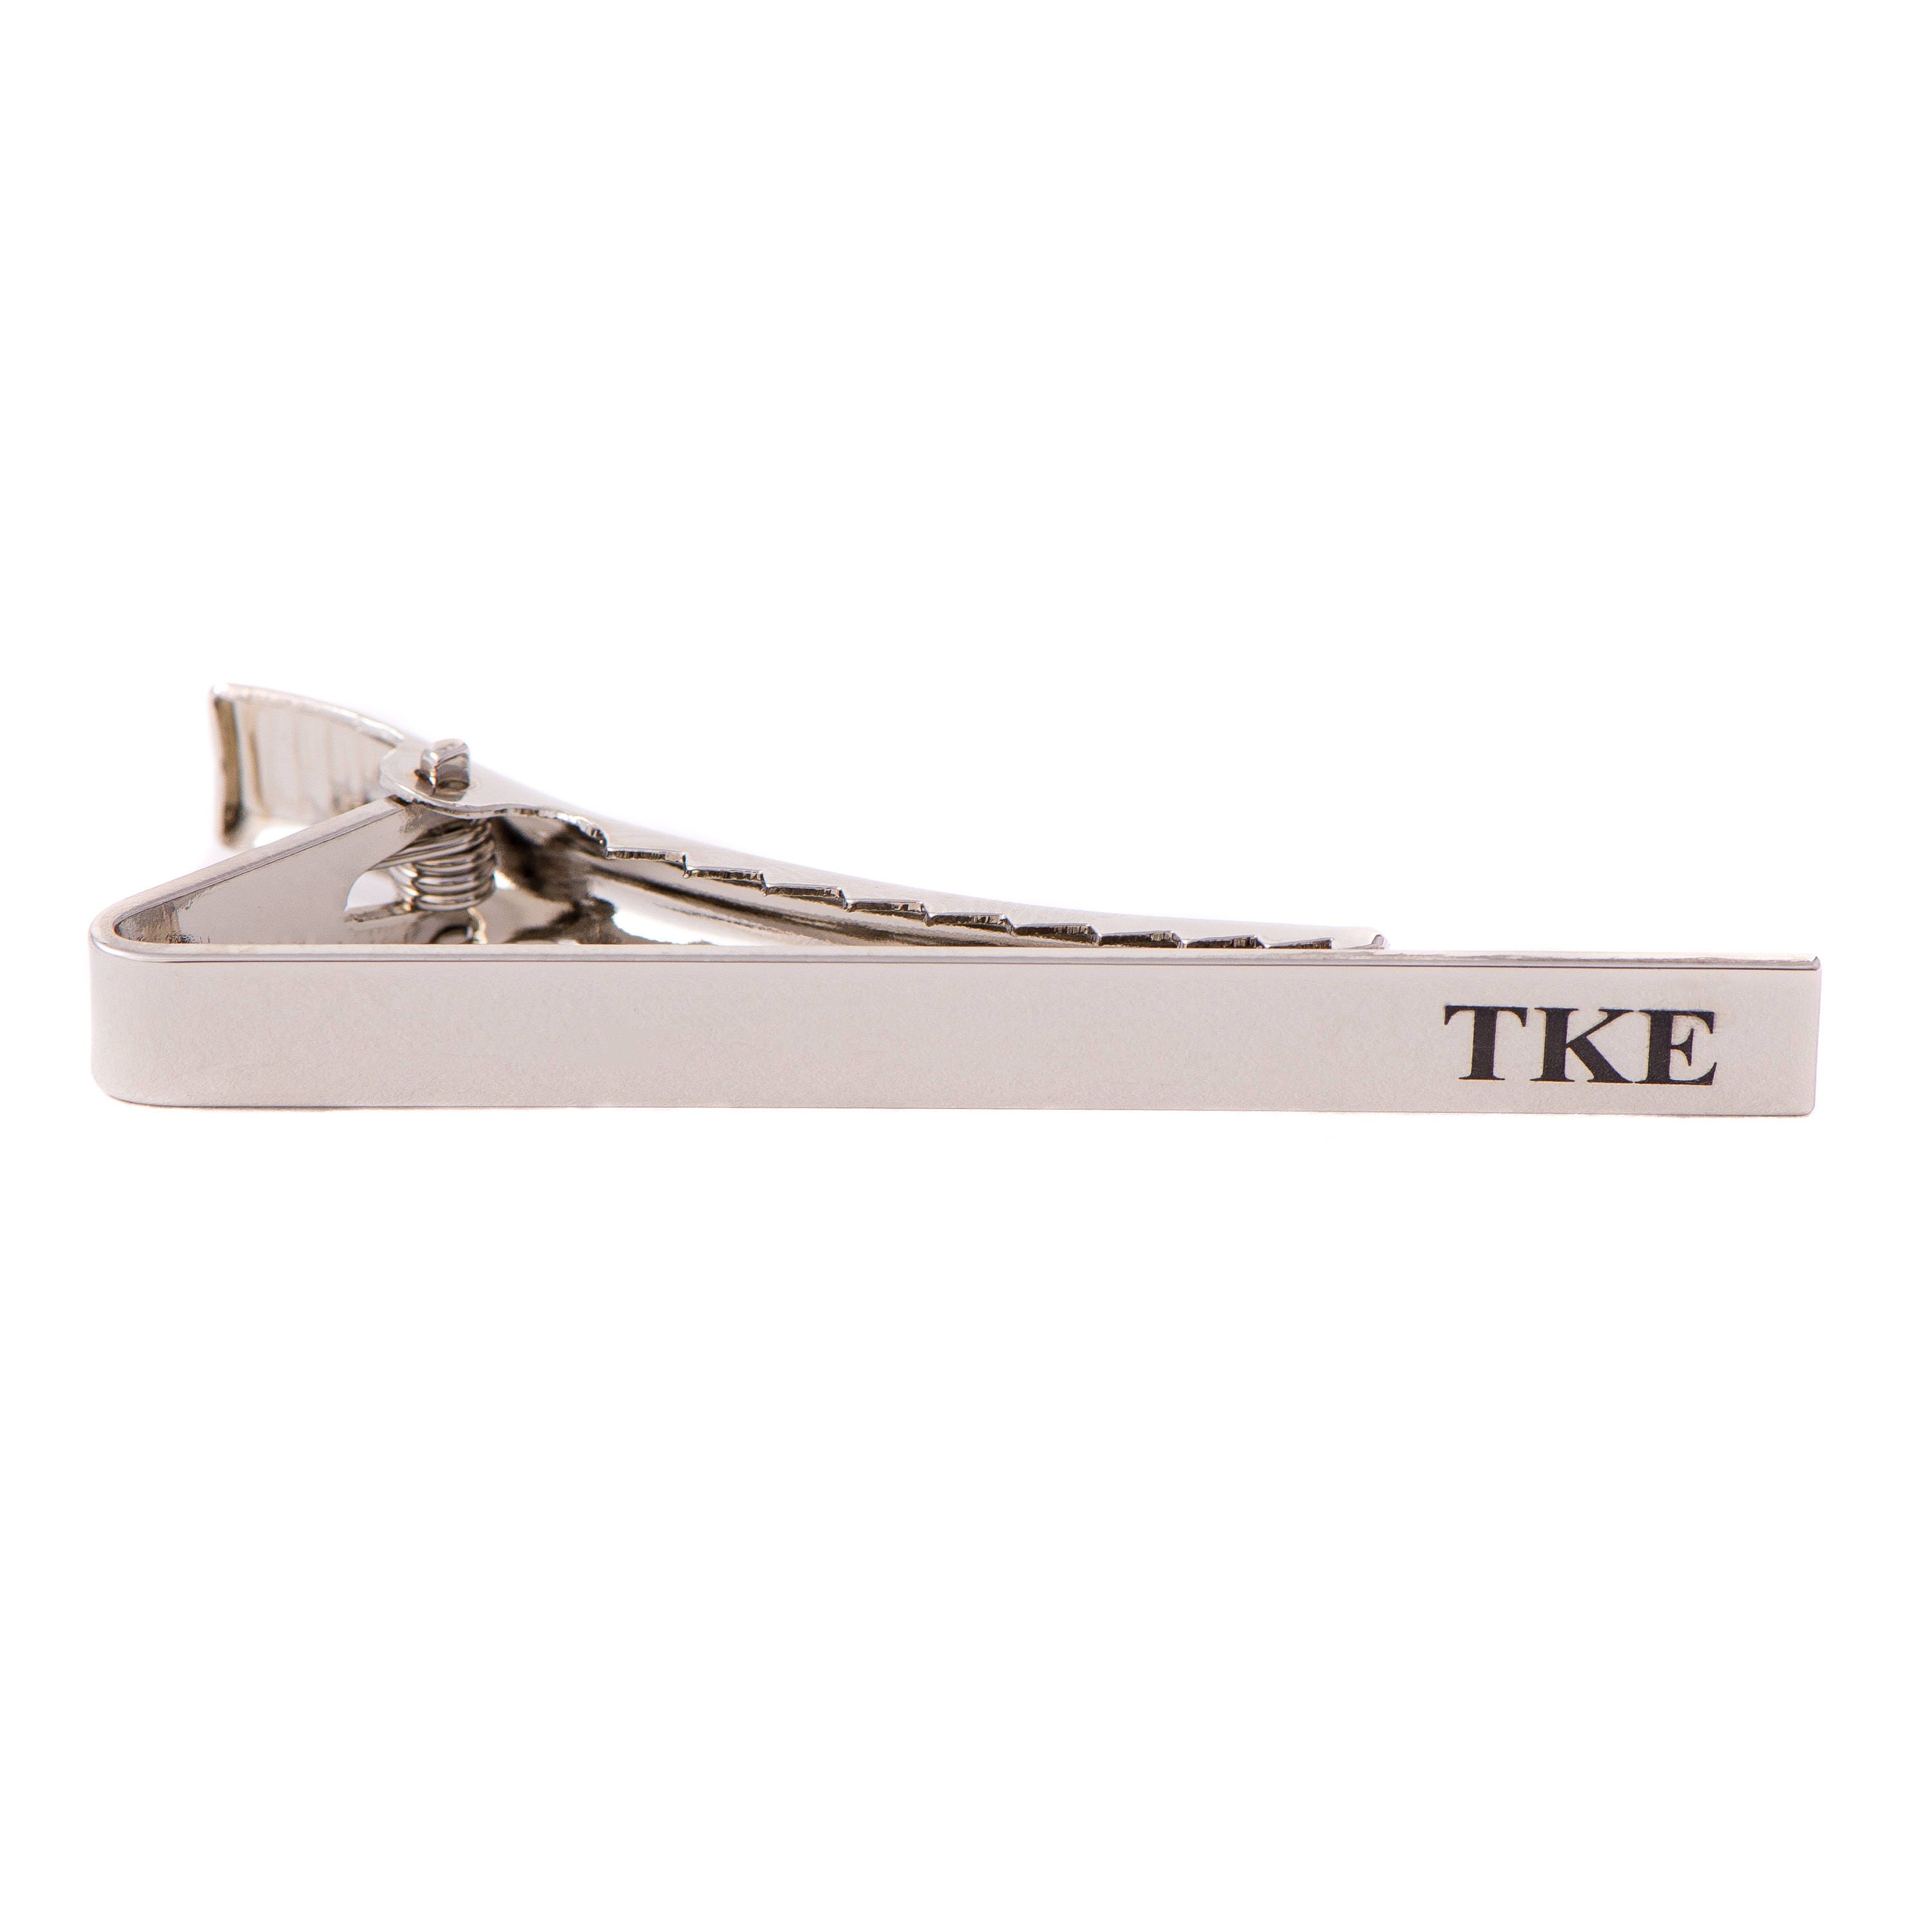 Brand New Tau Kappa Epsilon TKE Engraved Letter Tie Bar/Clip